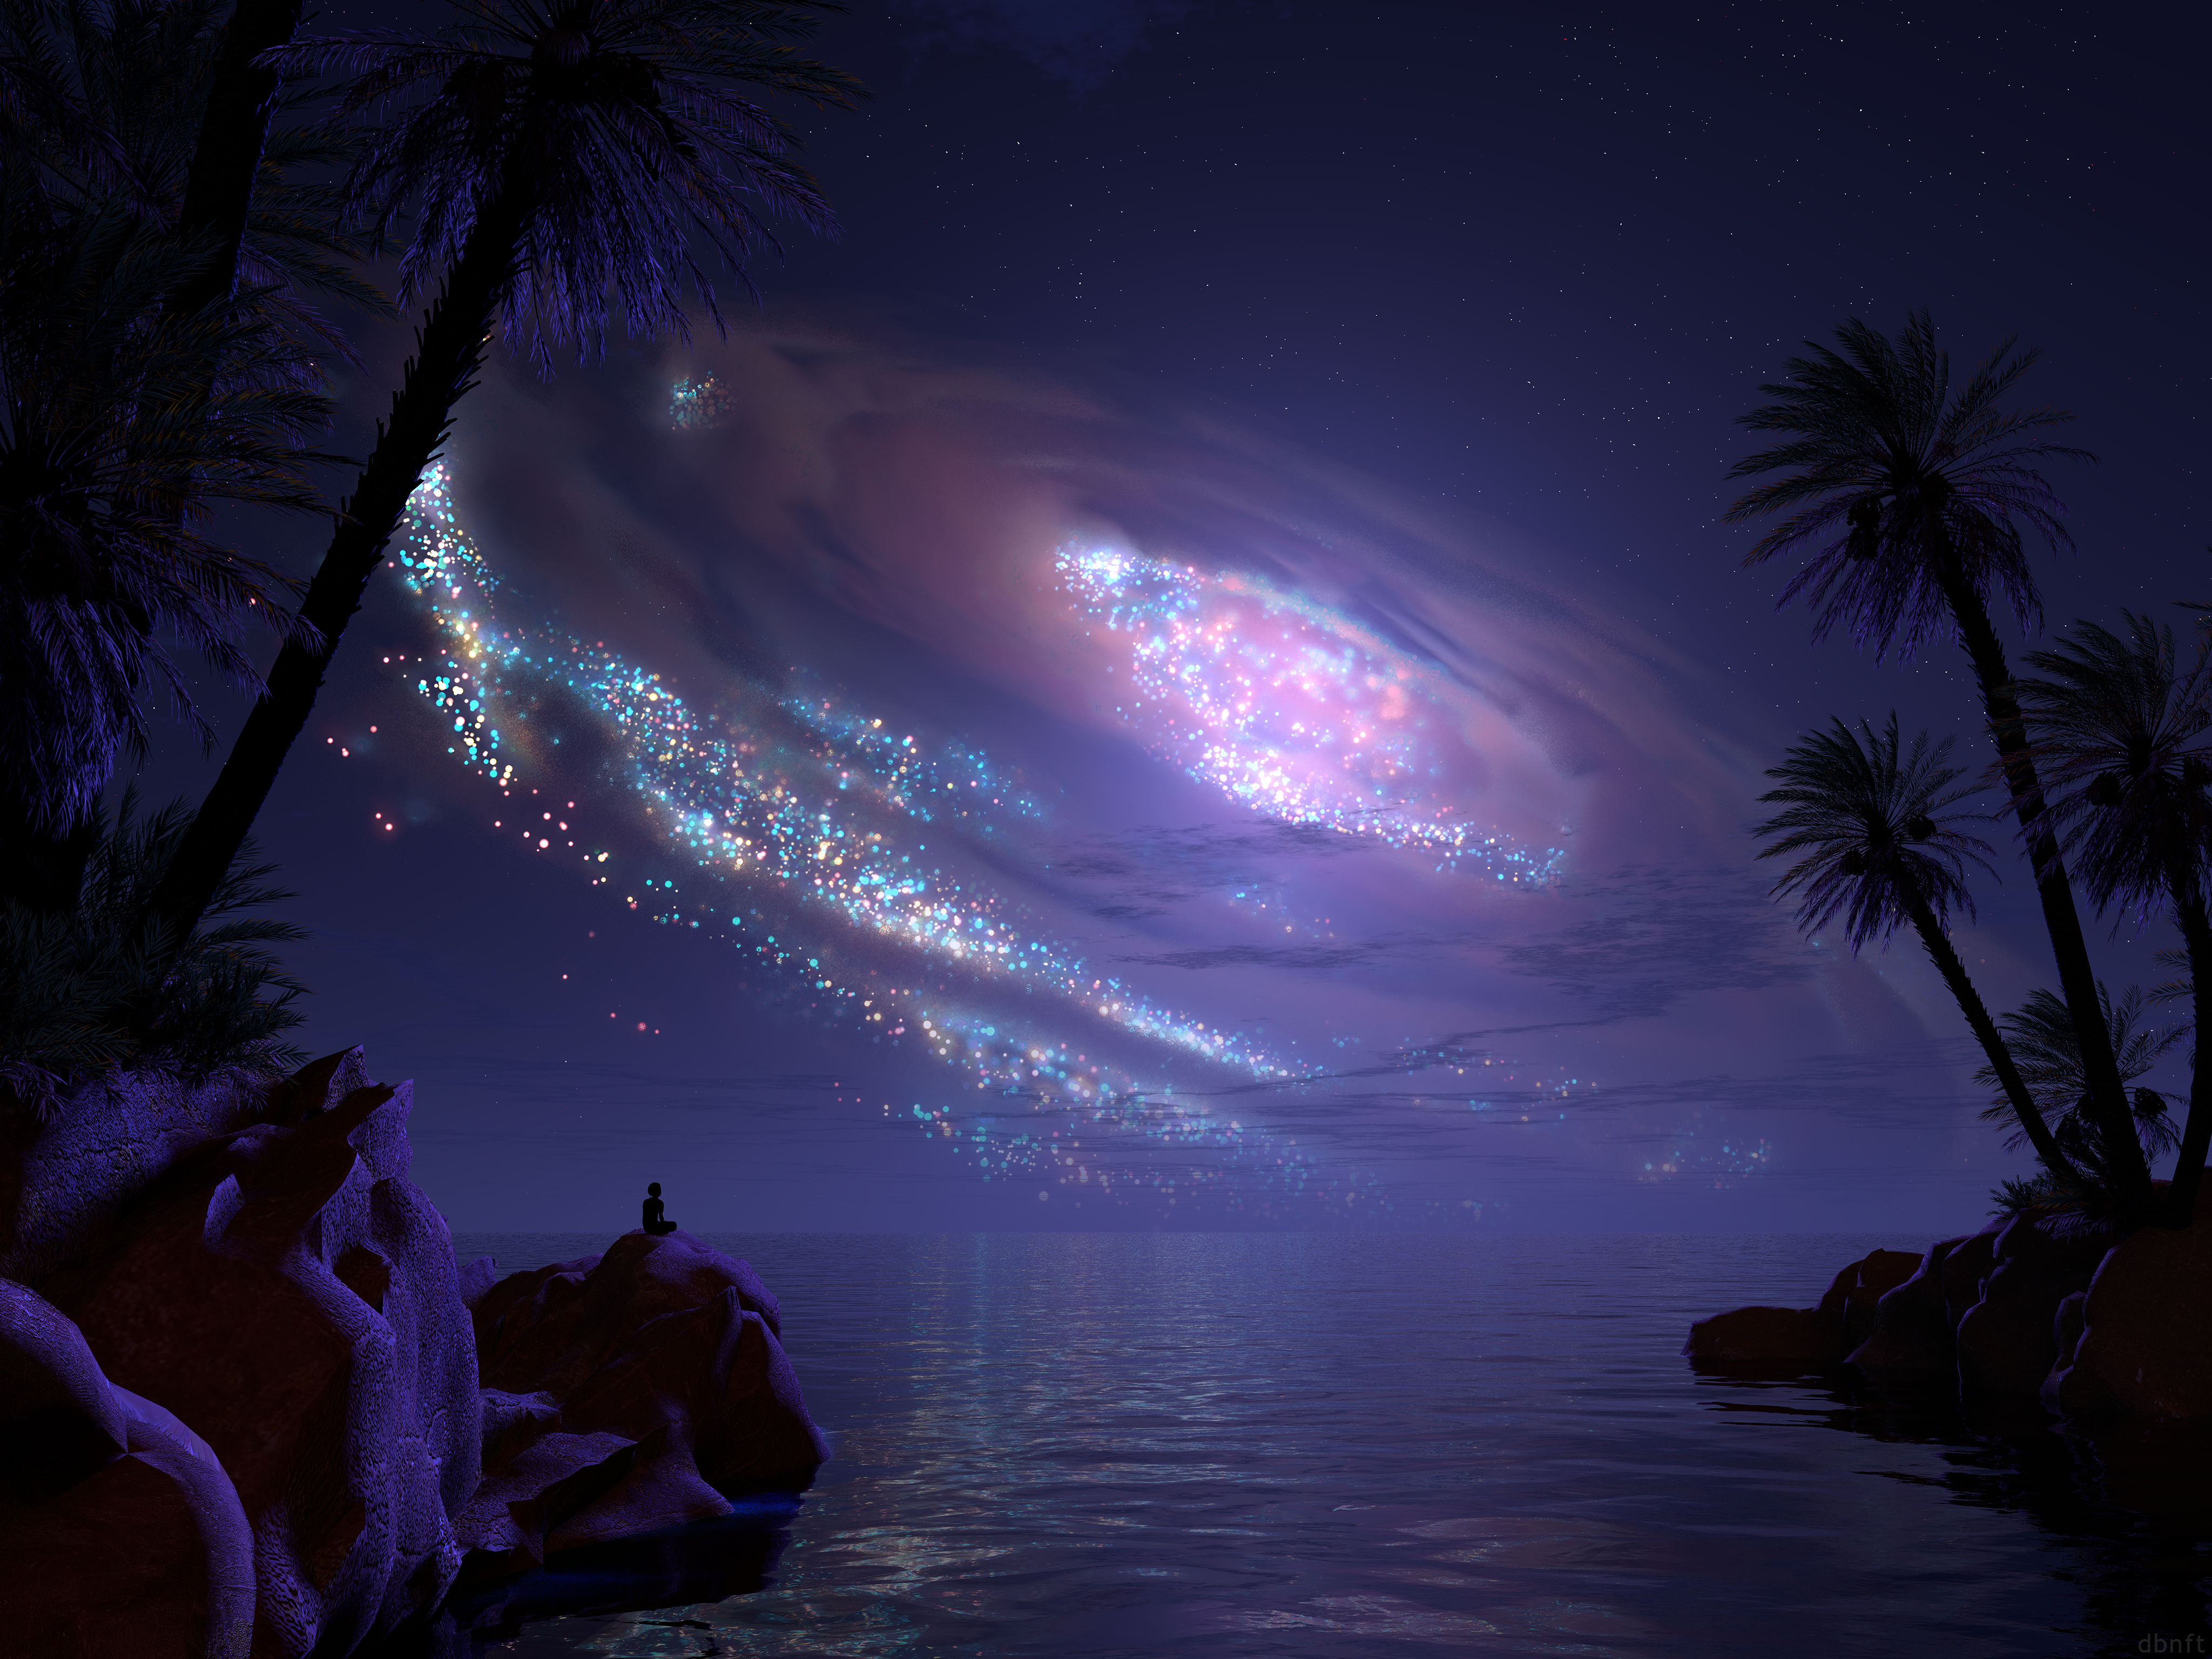 General 4096x3072 Digital Blasphemy digital art artwork CGI nature landscape abstract night palm trees sea nightscape galaxy stars